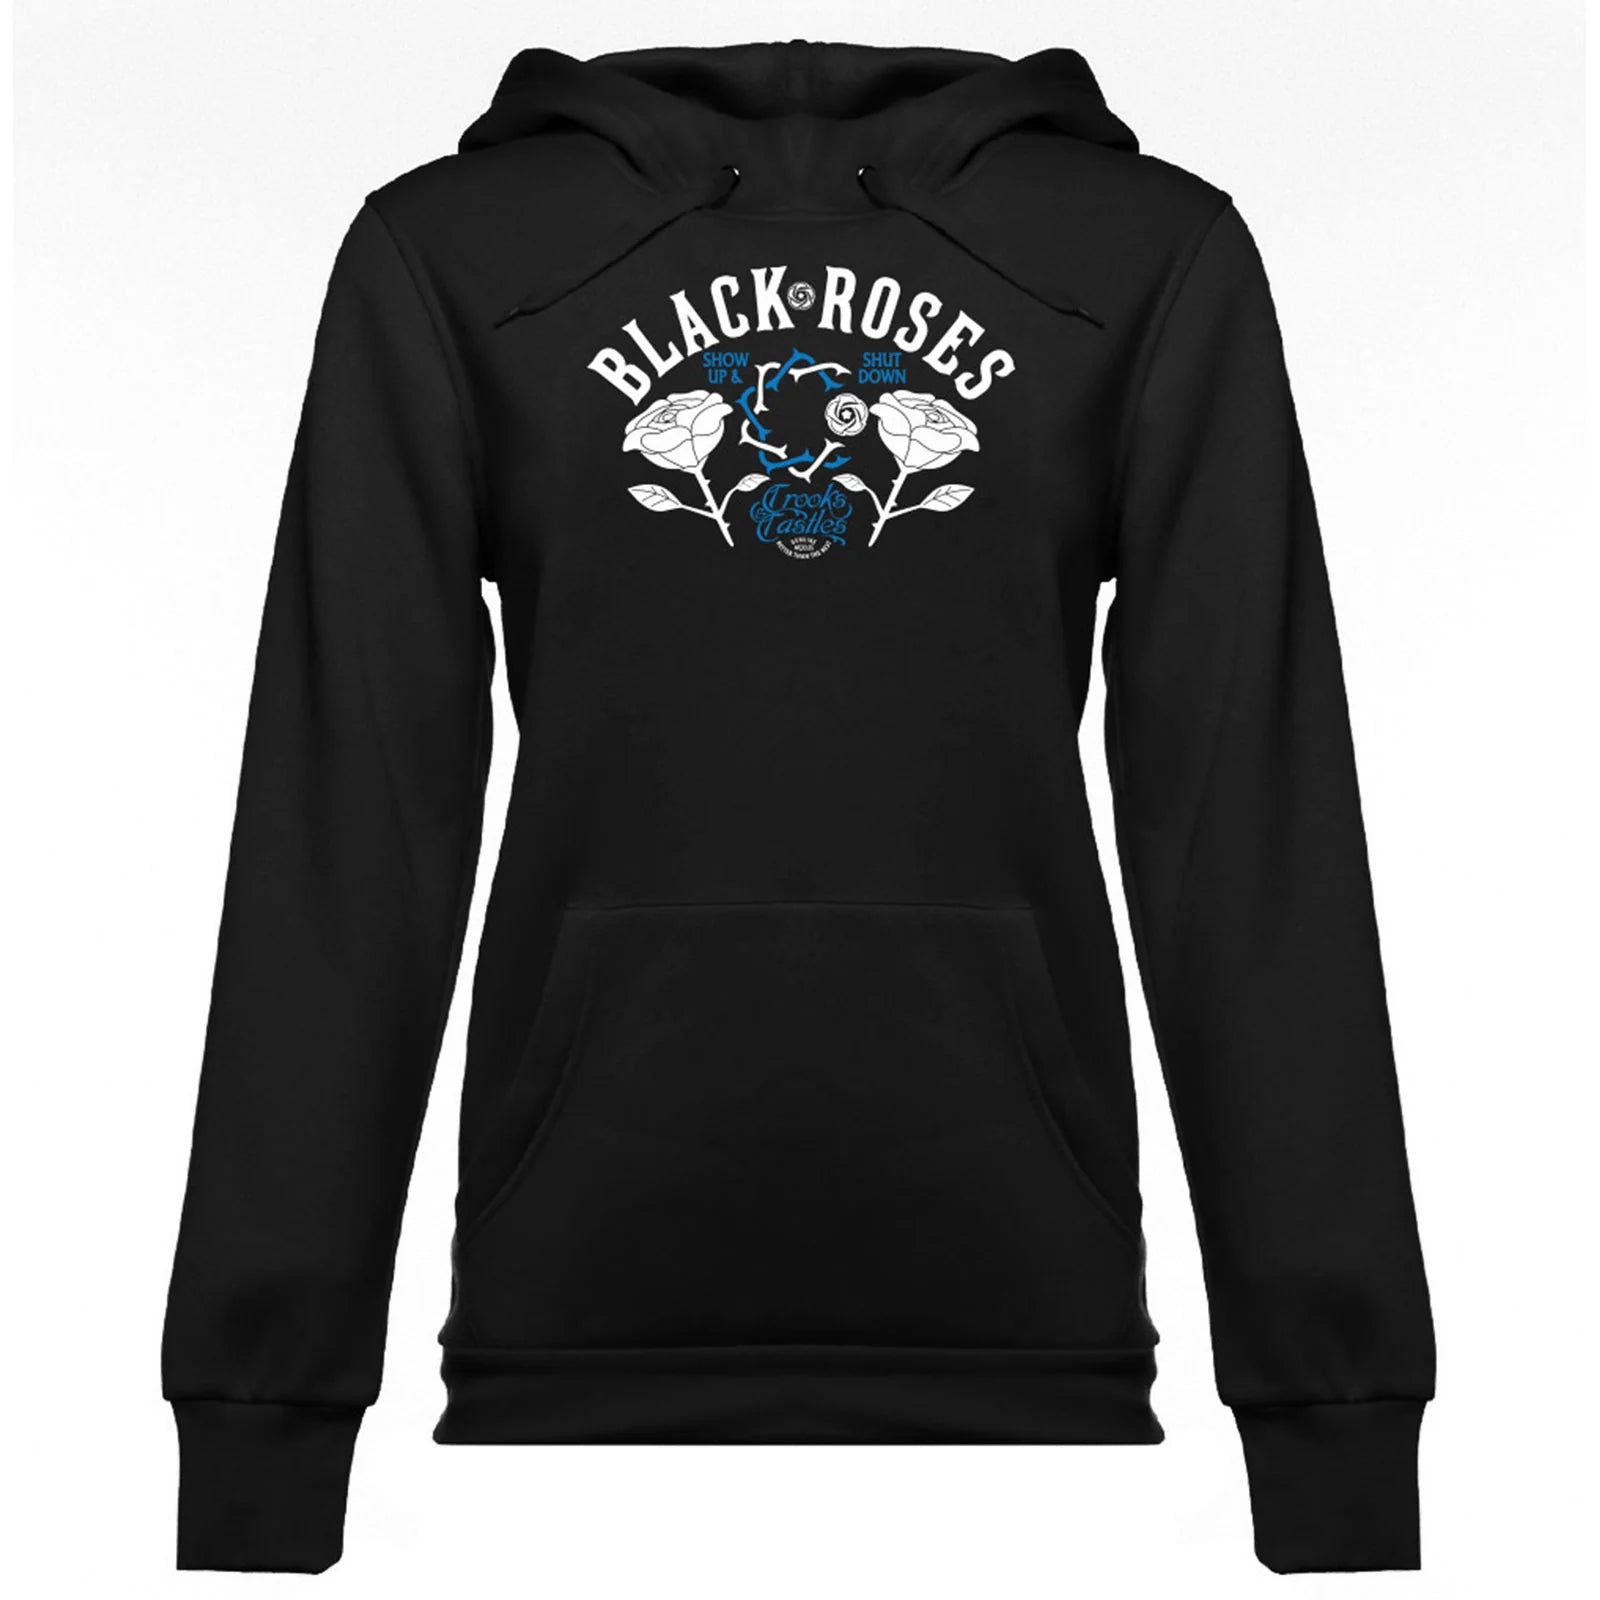 Crooks & Castles Black Rose Women's Hoody Pullover Sweatshirts